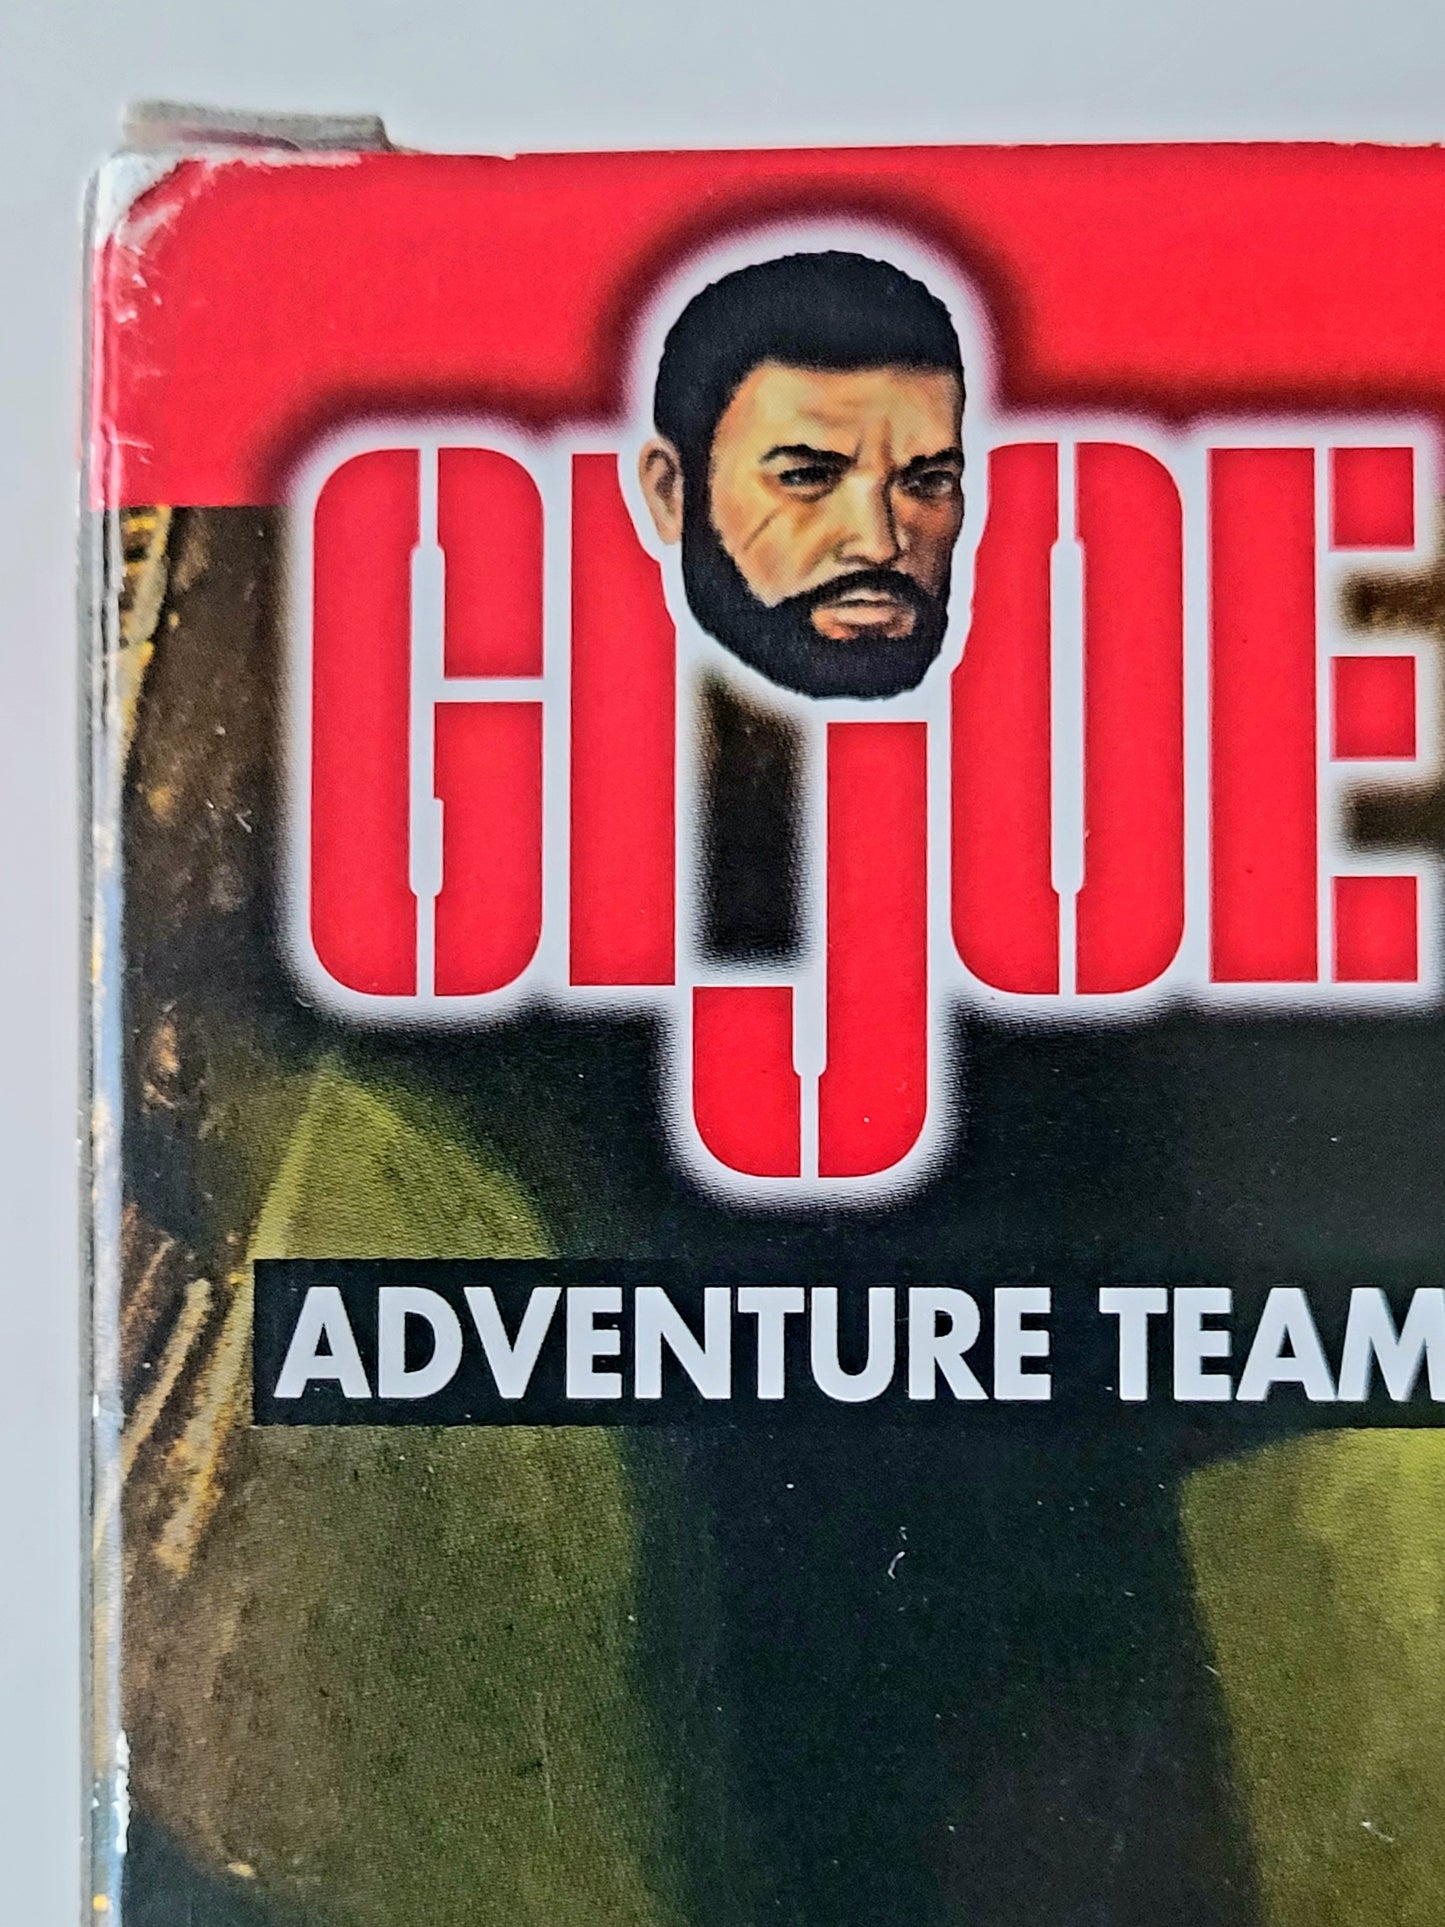 G.I. Joe Adventure Team Secret of the Mummy's Tomb